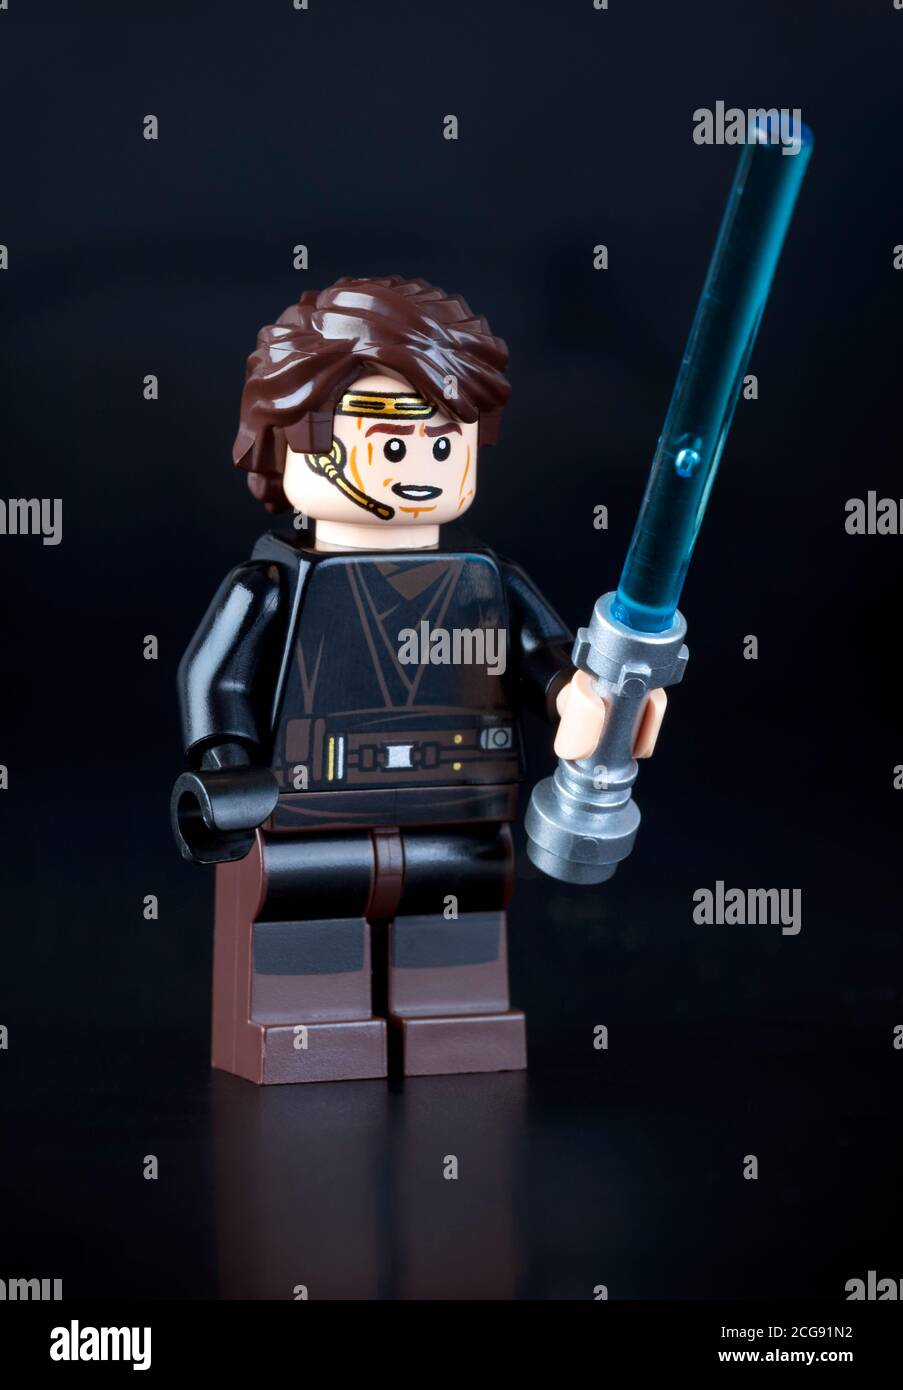 Tambov, Russian Federation - June 21, 2014 Lego Anakin Skywalker Minifigure with lightsaber on black background. Studio shot. Stock Photo